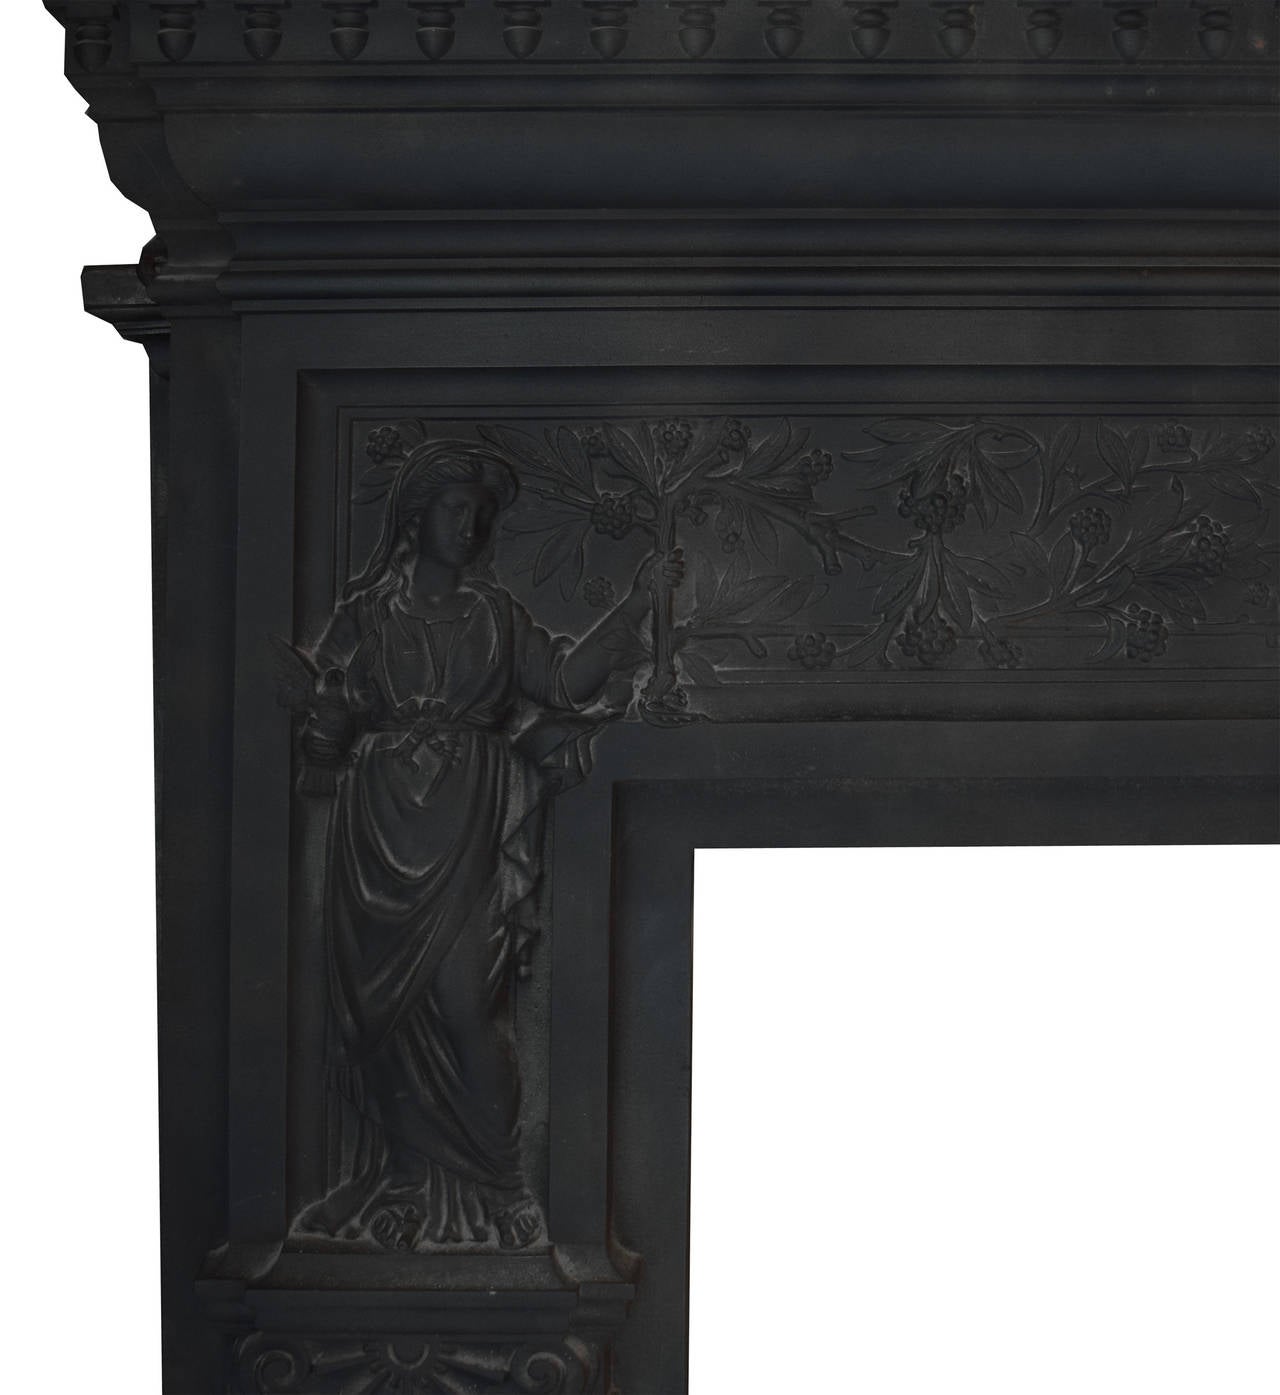 An English polished cast iron fireplace mantel with a peace and plenty motif.
Firebox opening: 35.5